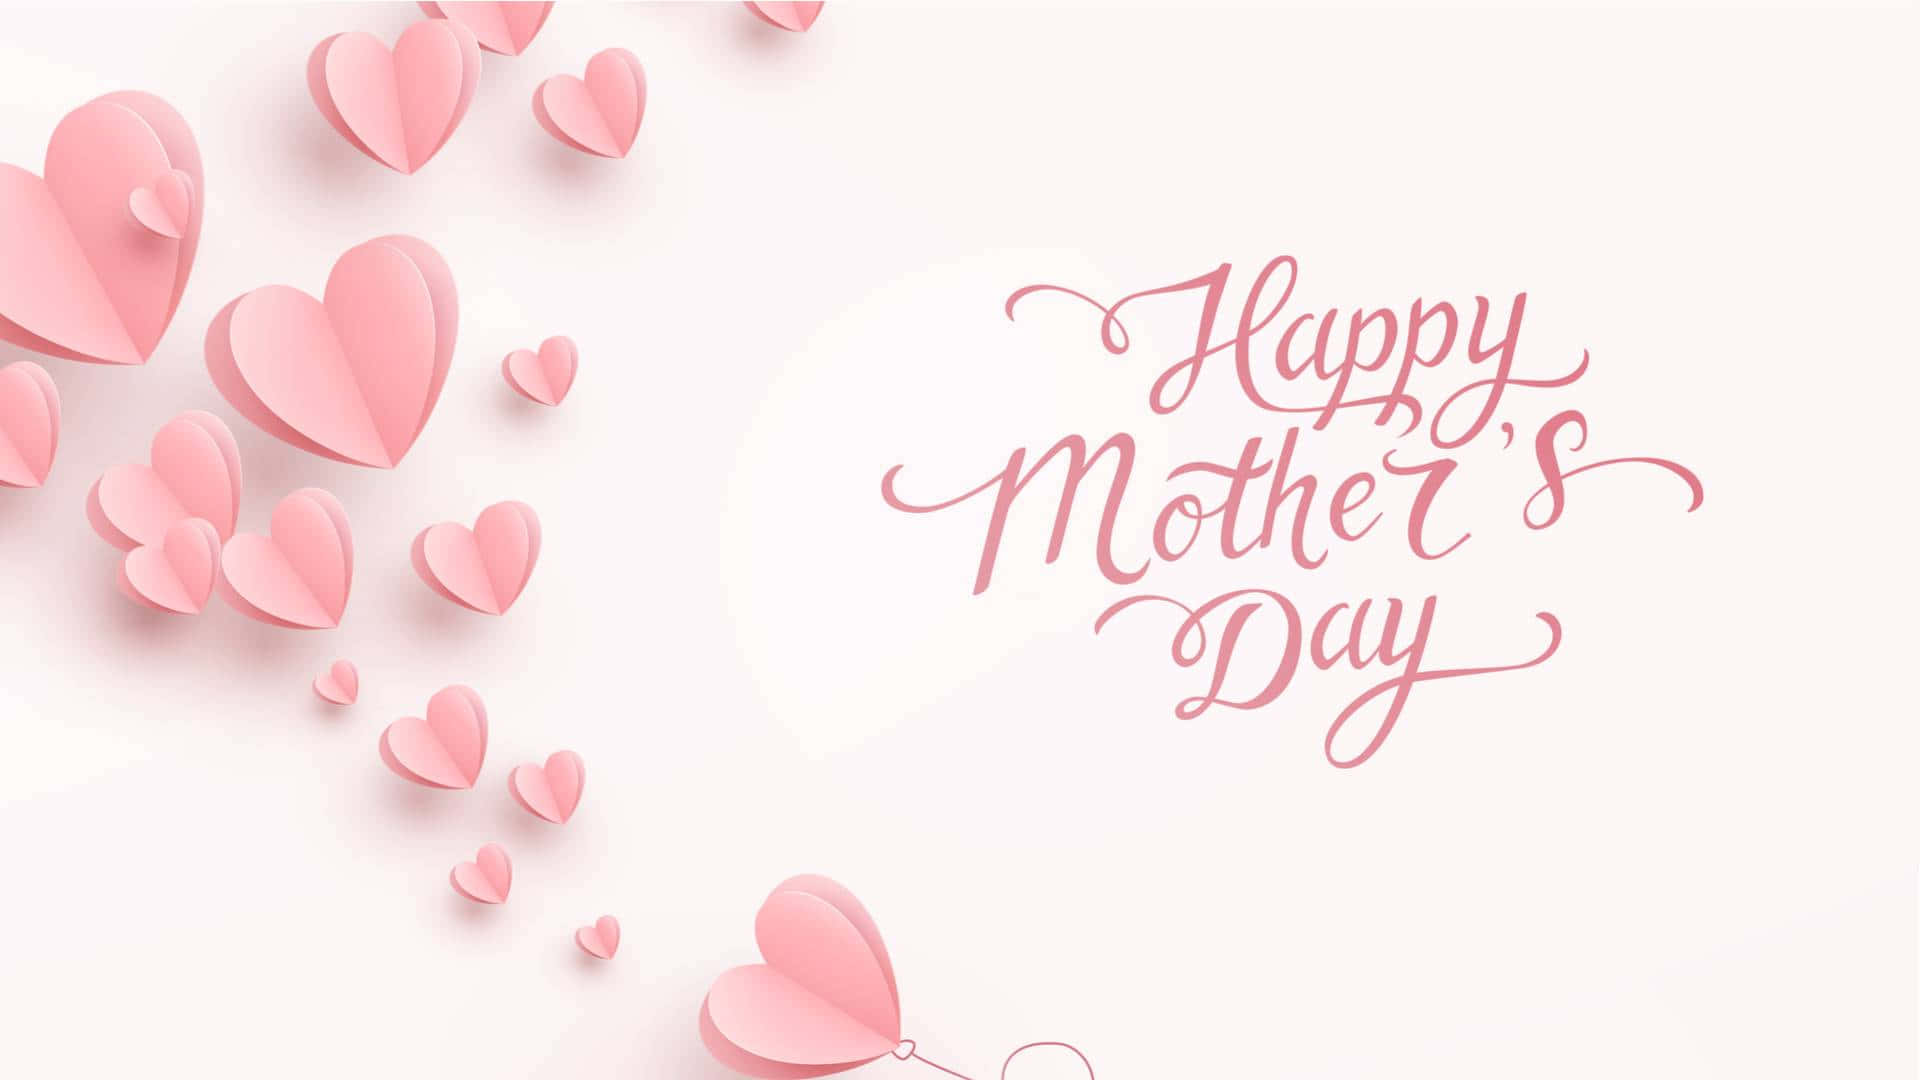 Feiernsie Die Frau, Die Sie Bedingungslos Liebt, An Diesem Muttertag.